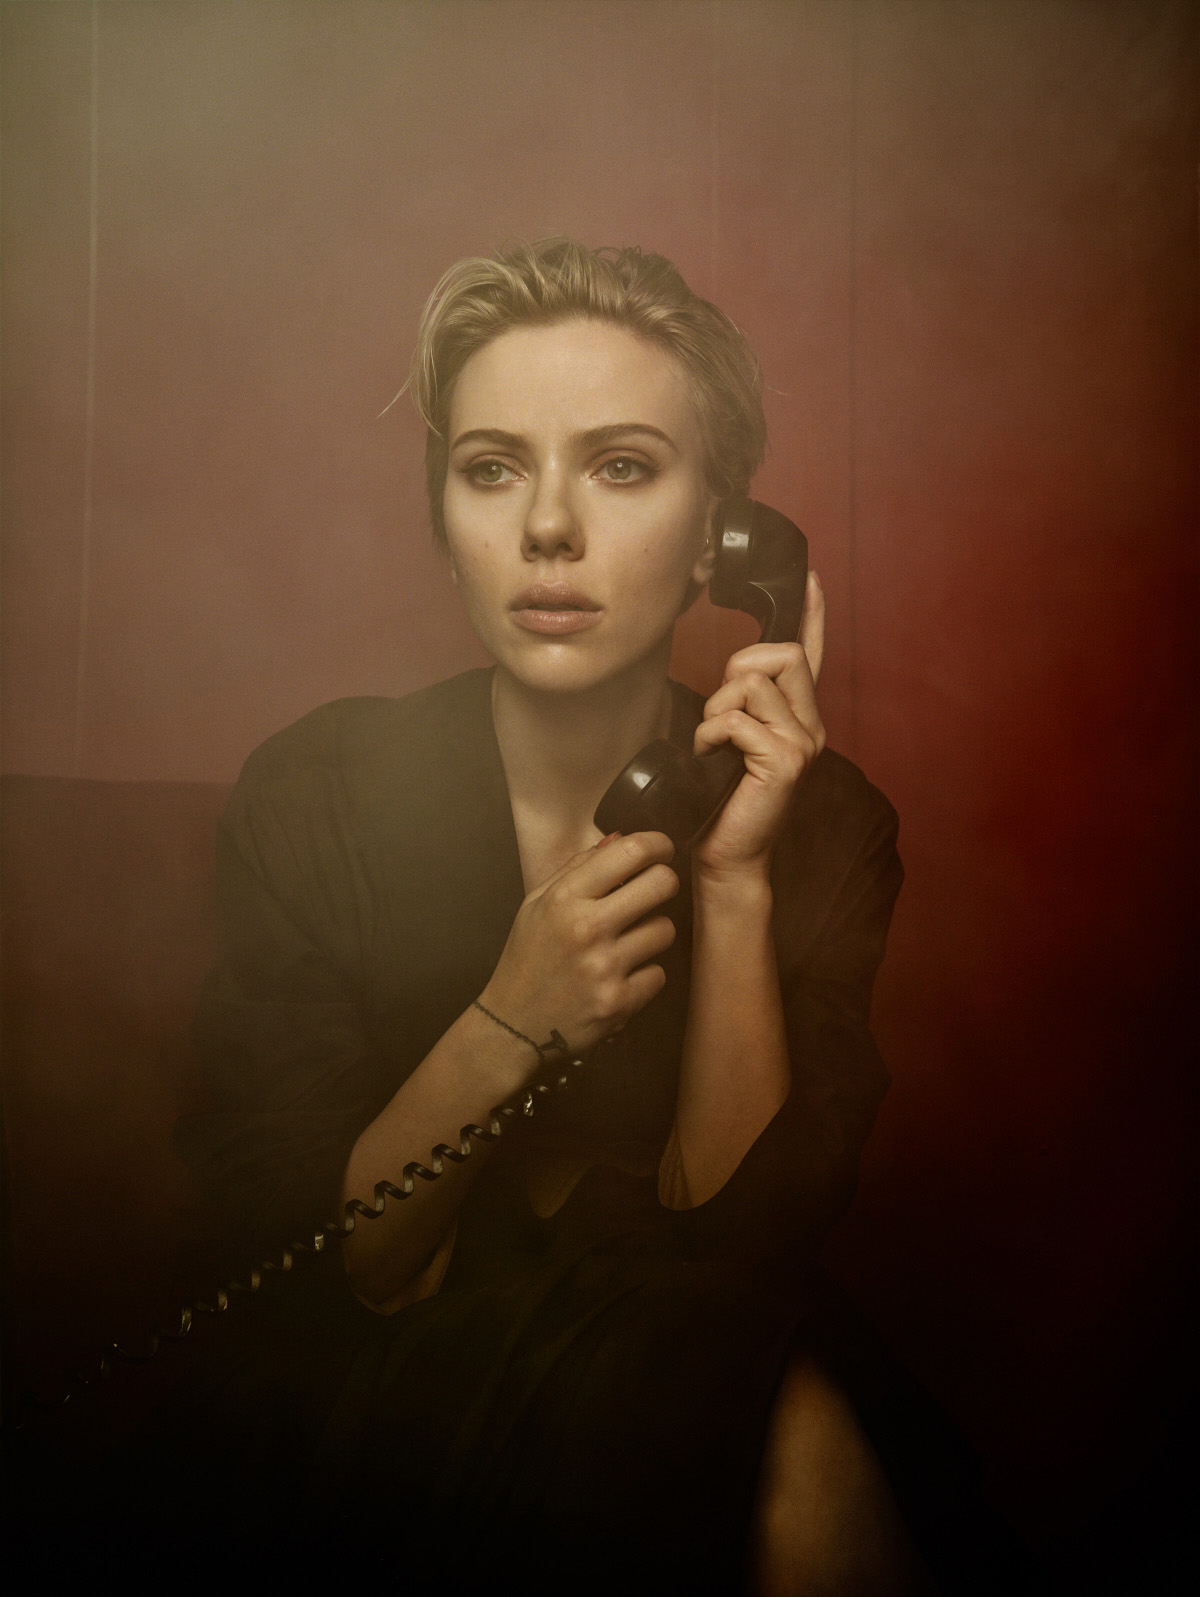 Photograph of actress Scarlett Johansson holding a black handset.